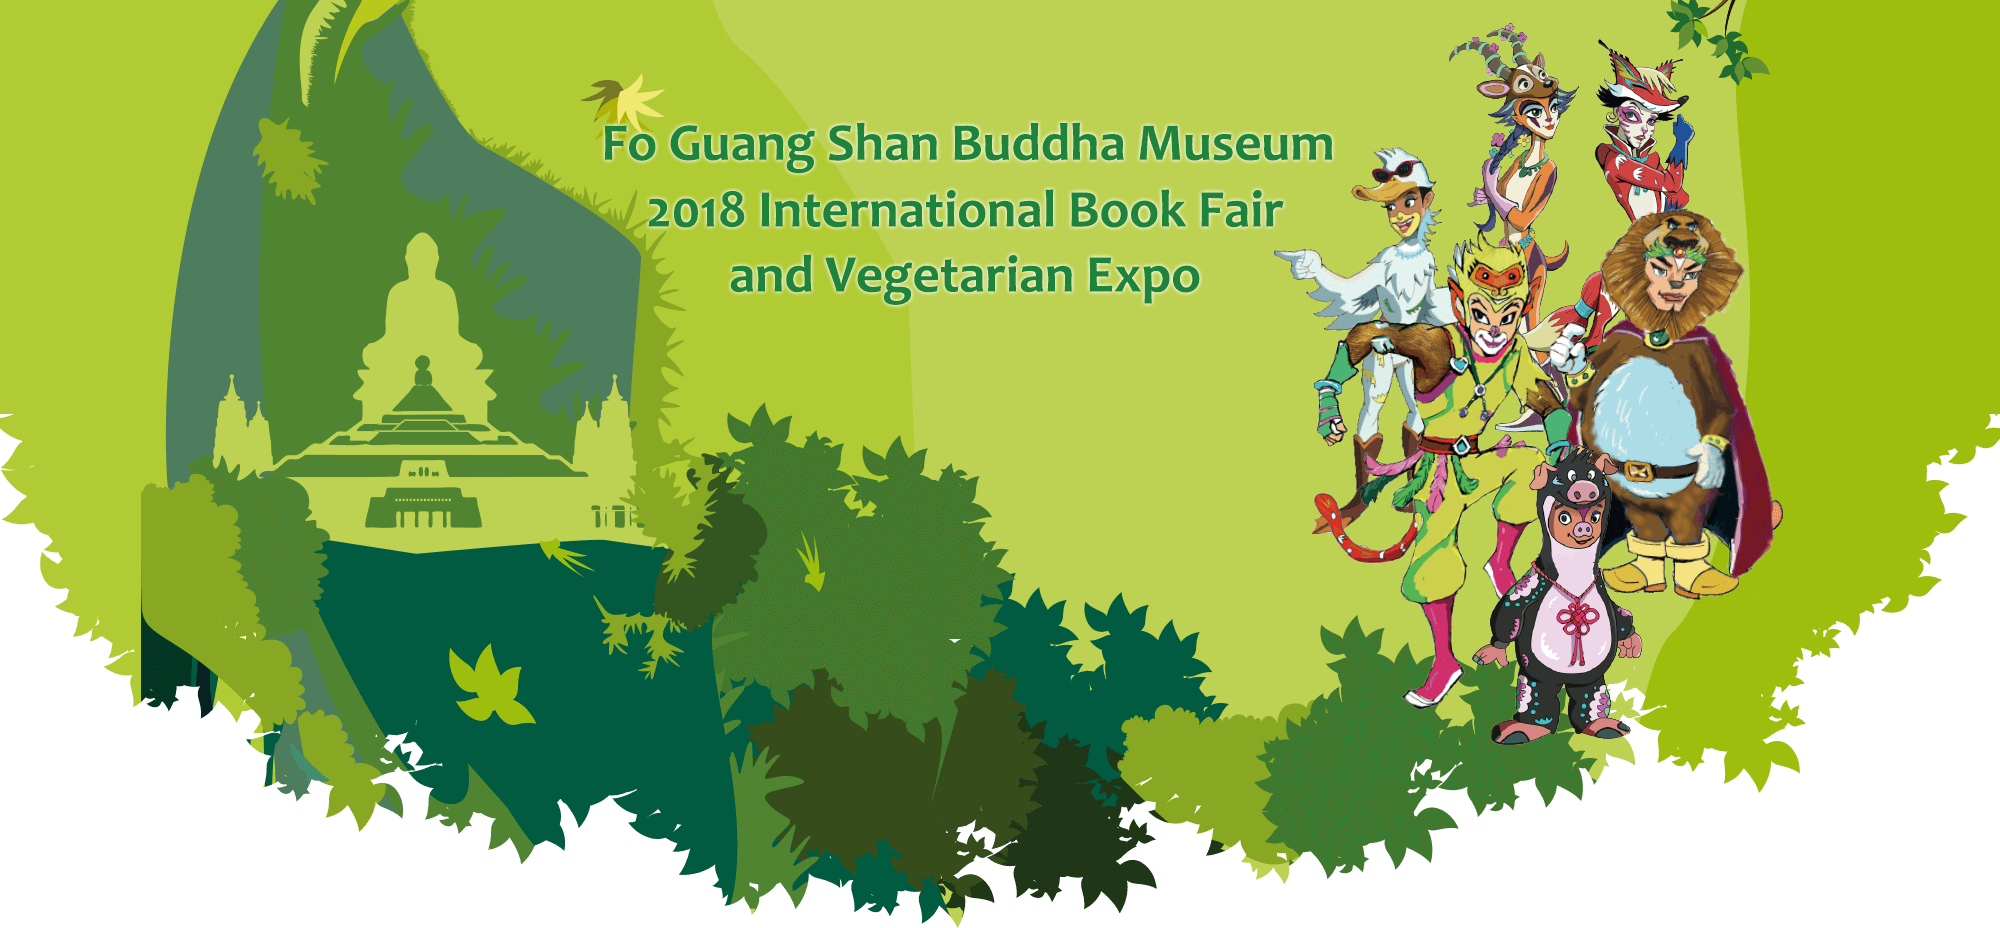 2018 Fo Guang Shan Buddha Museum International Book Fair and Vegetarian Expo